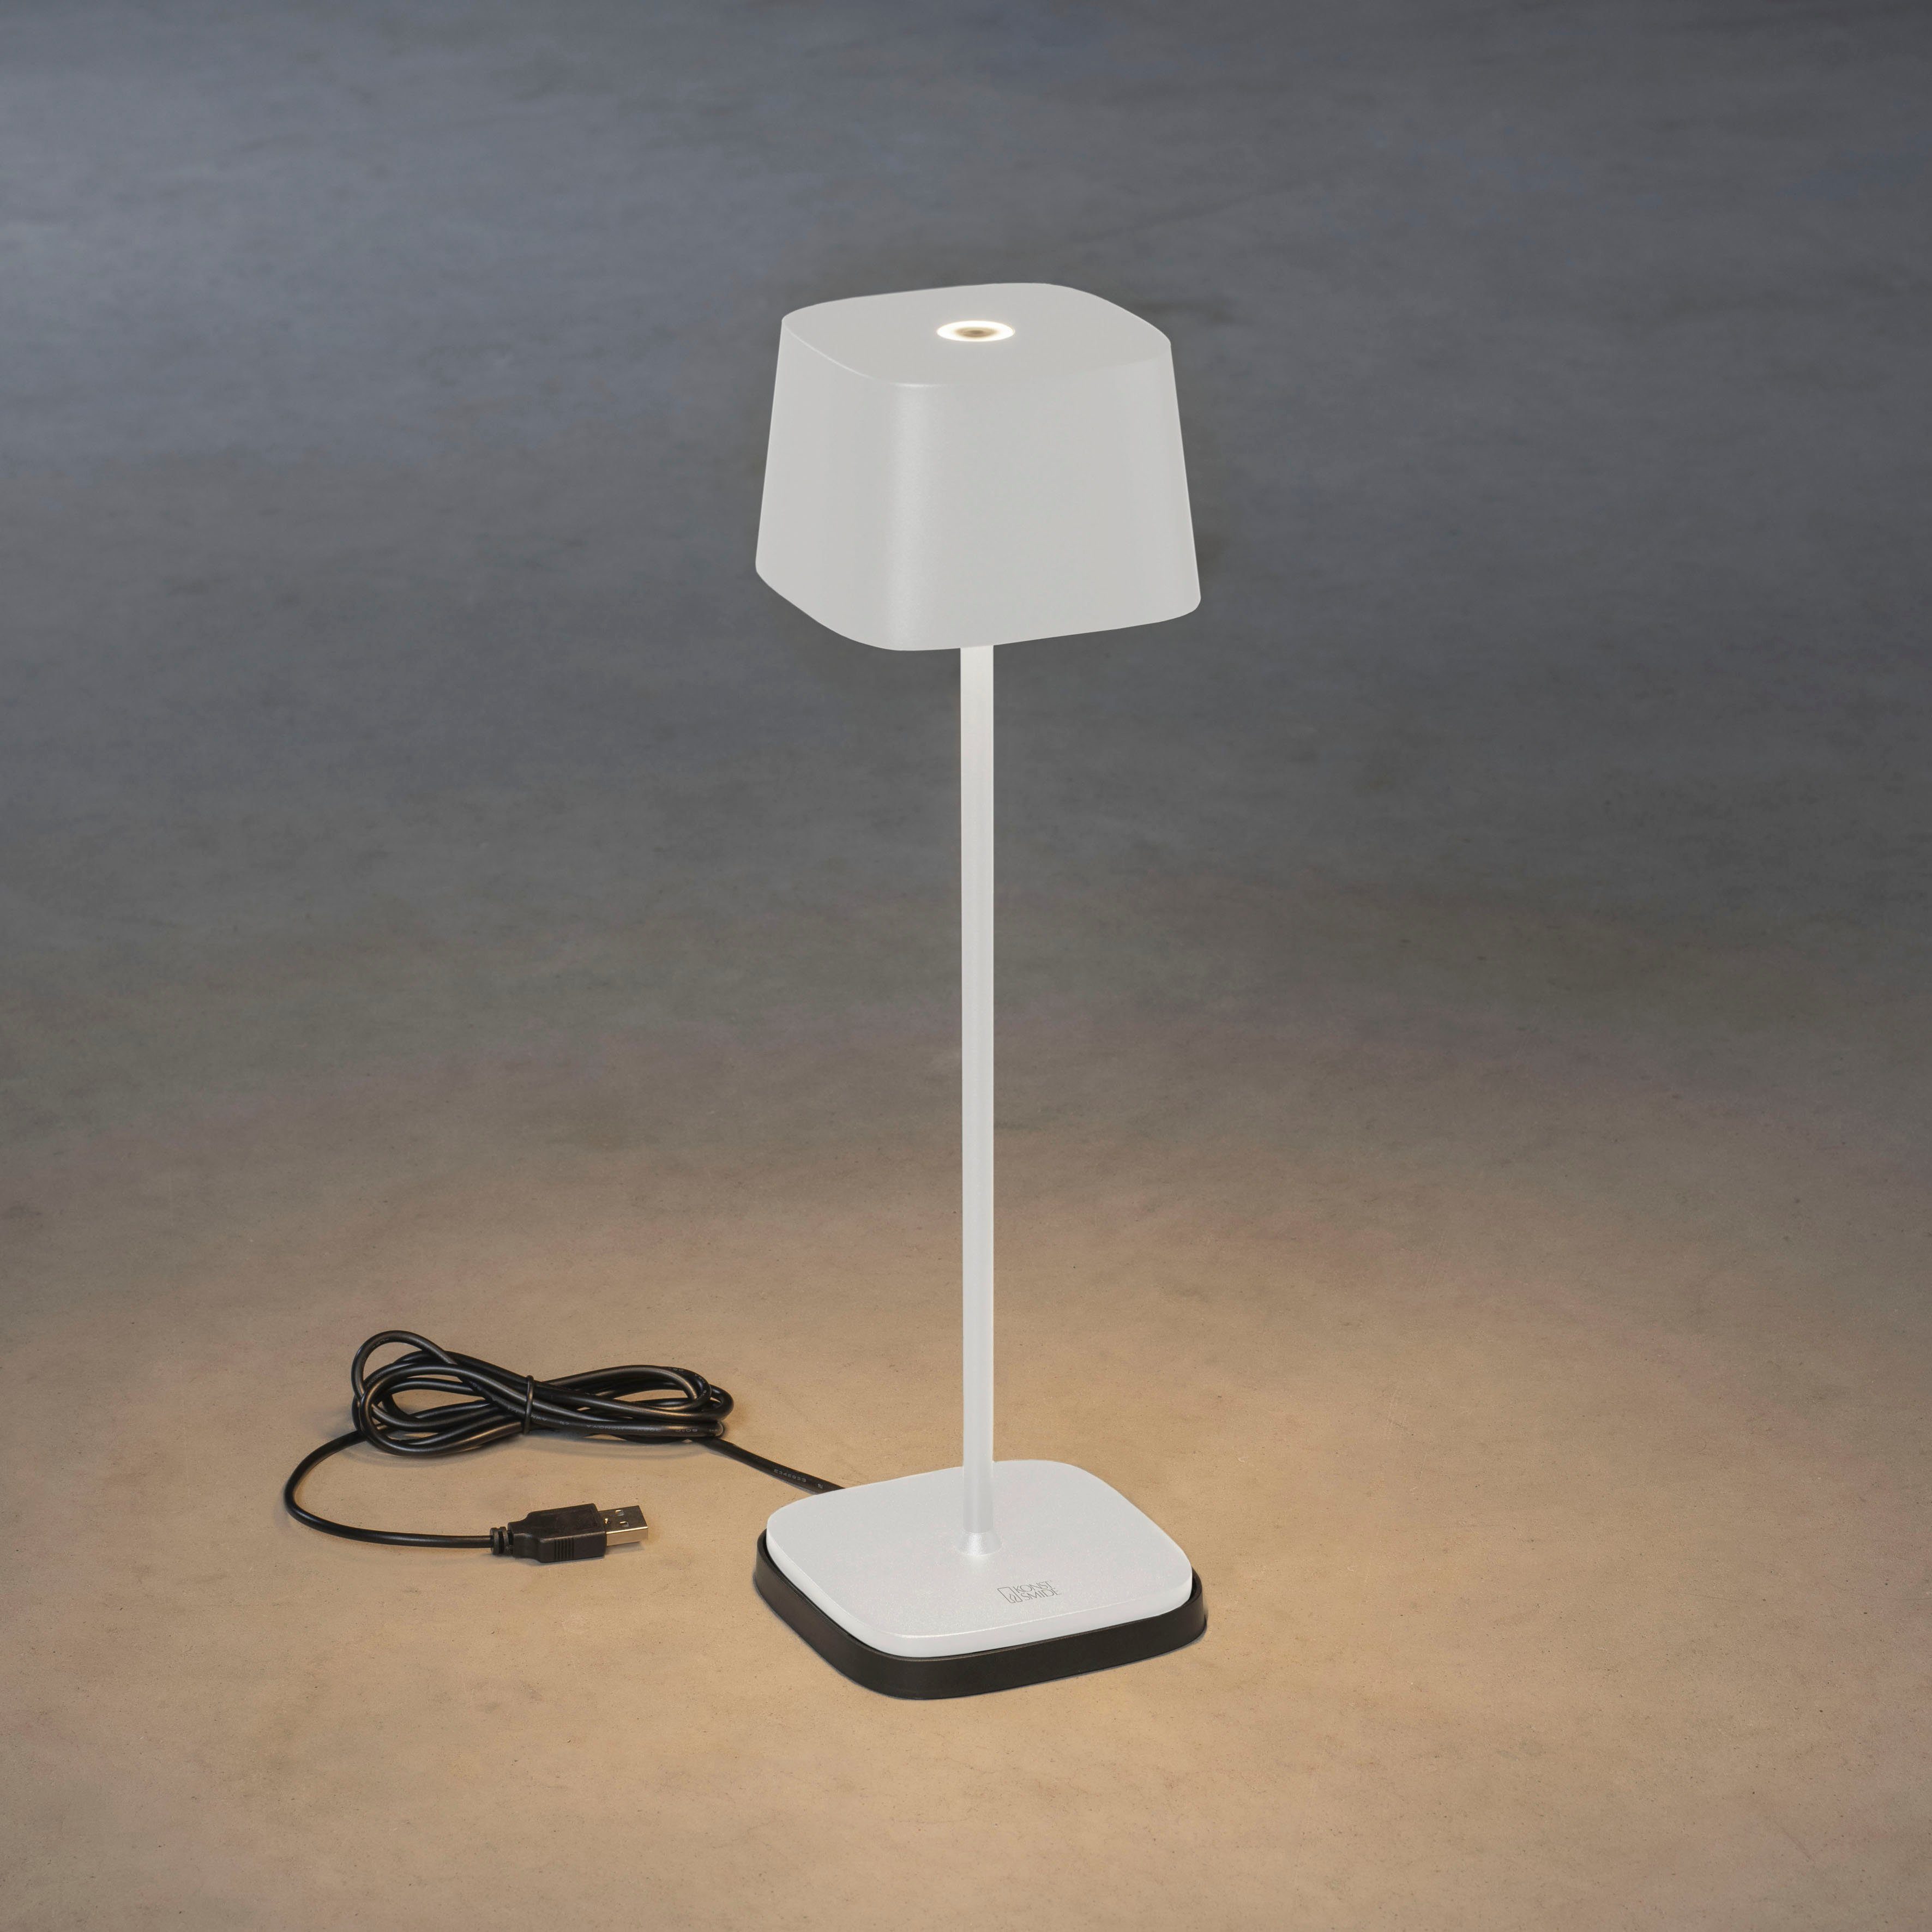 KONSTSMIDE LED Tischleuchte Capri, LED LED fest weiss, Warmweiß, Capri dimmbar integriert, USB-Tischleuchte Farbtemperatur